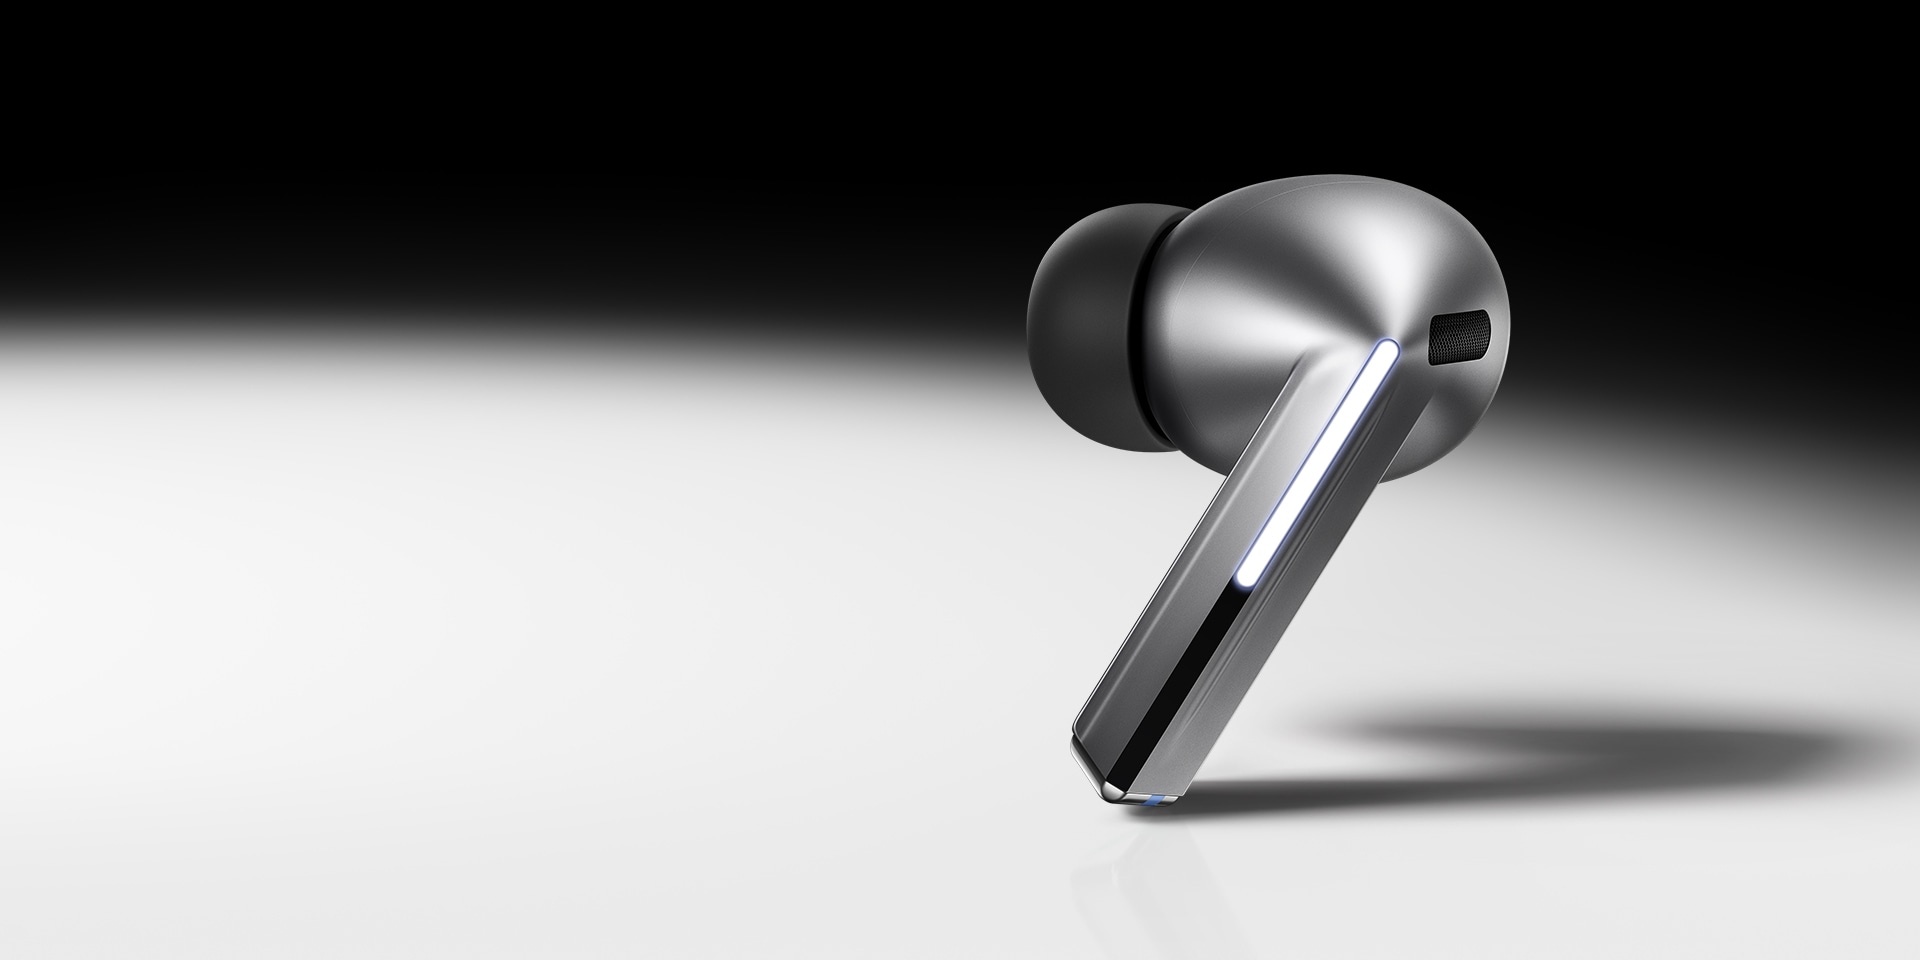 Ena ušesna slušalka Galaxy Buds3 Pro srebrne barve na črno-belem gradientnem ozadju. 